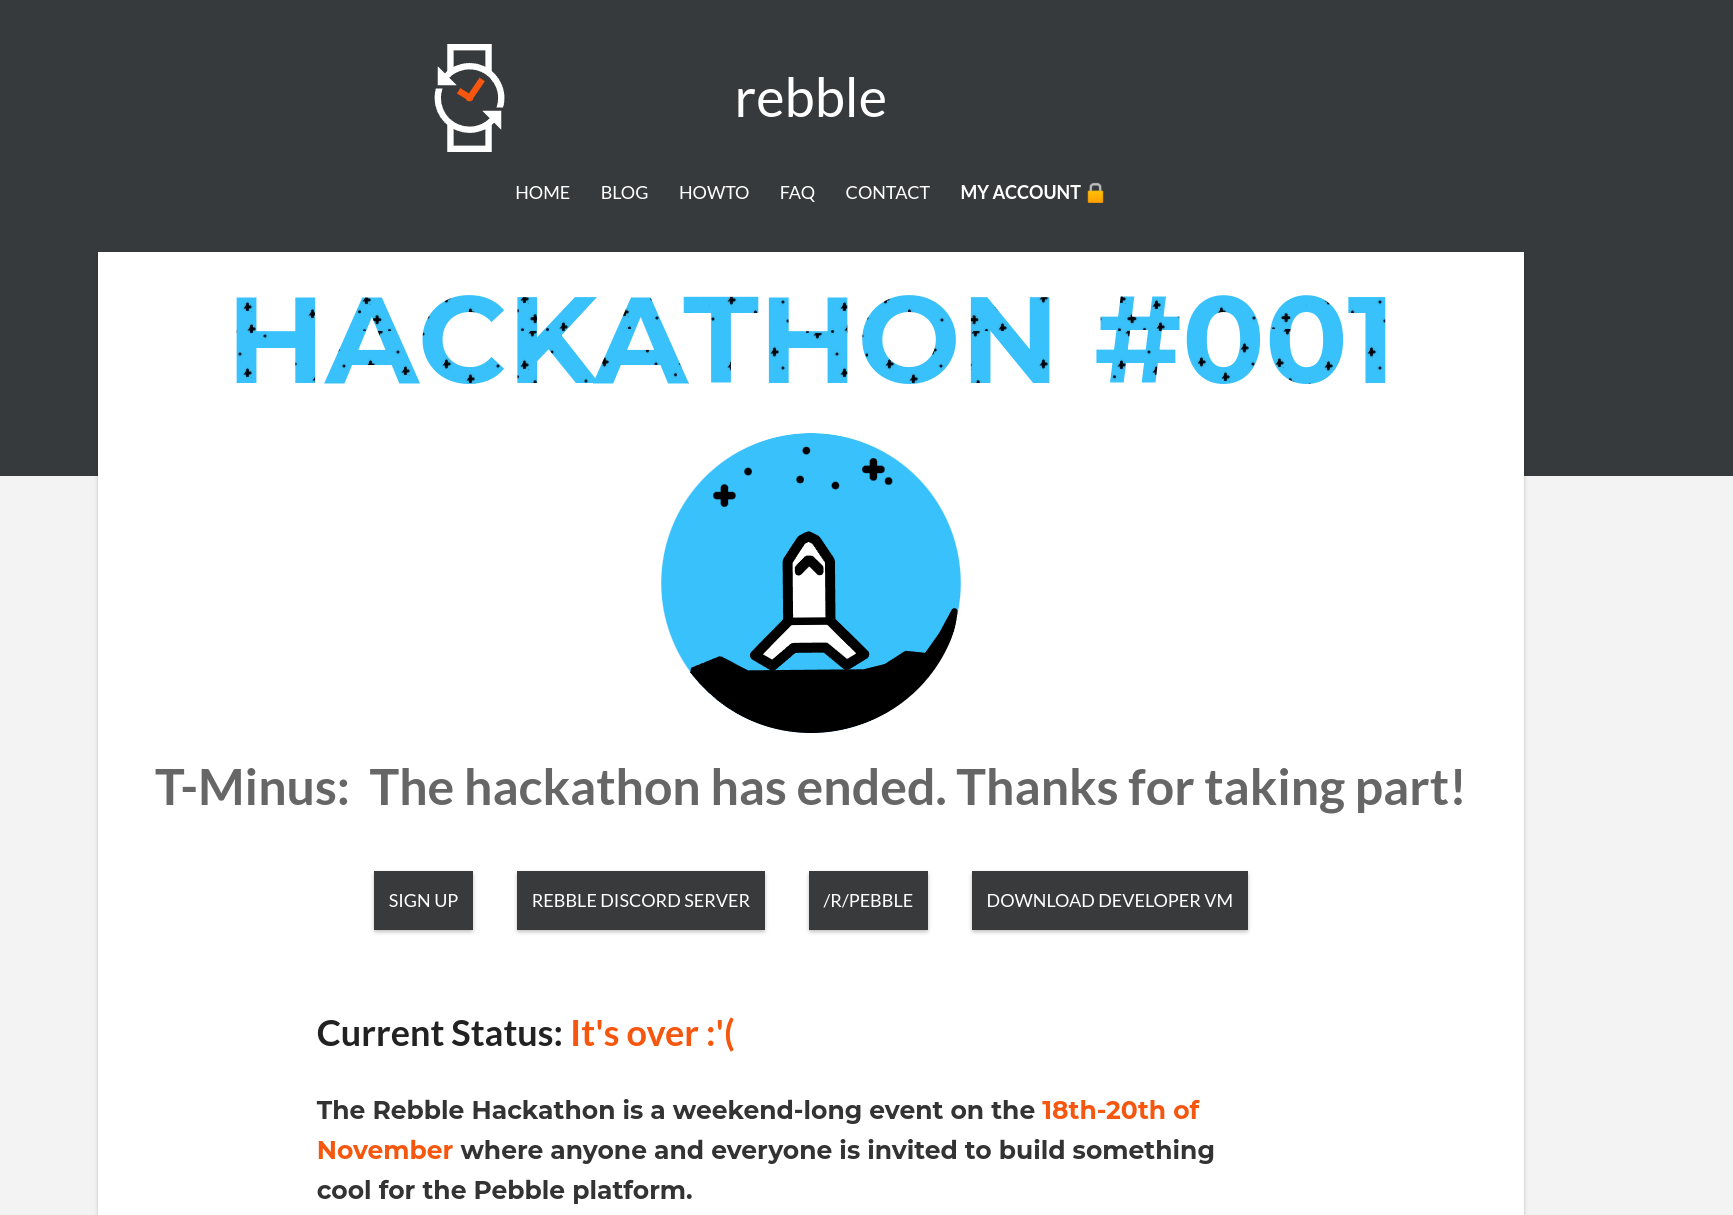 Rebble hackathon #001